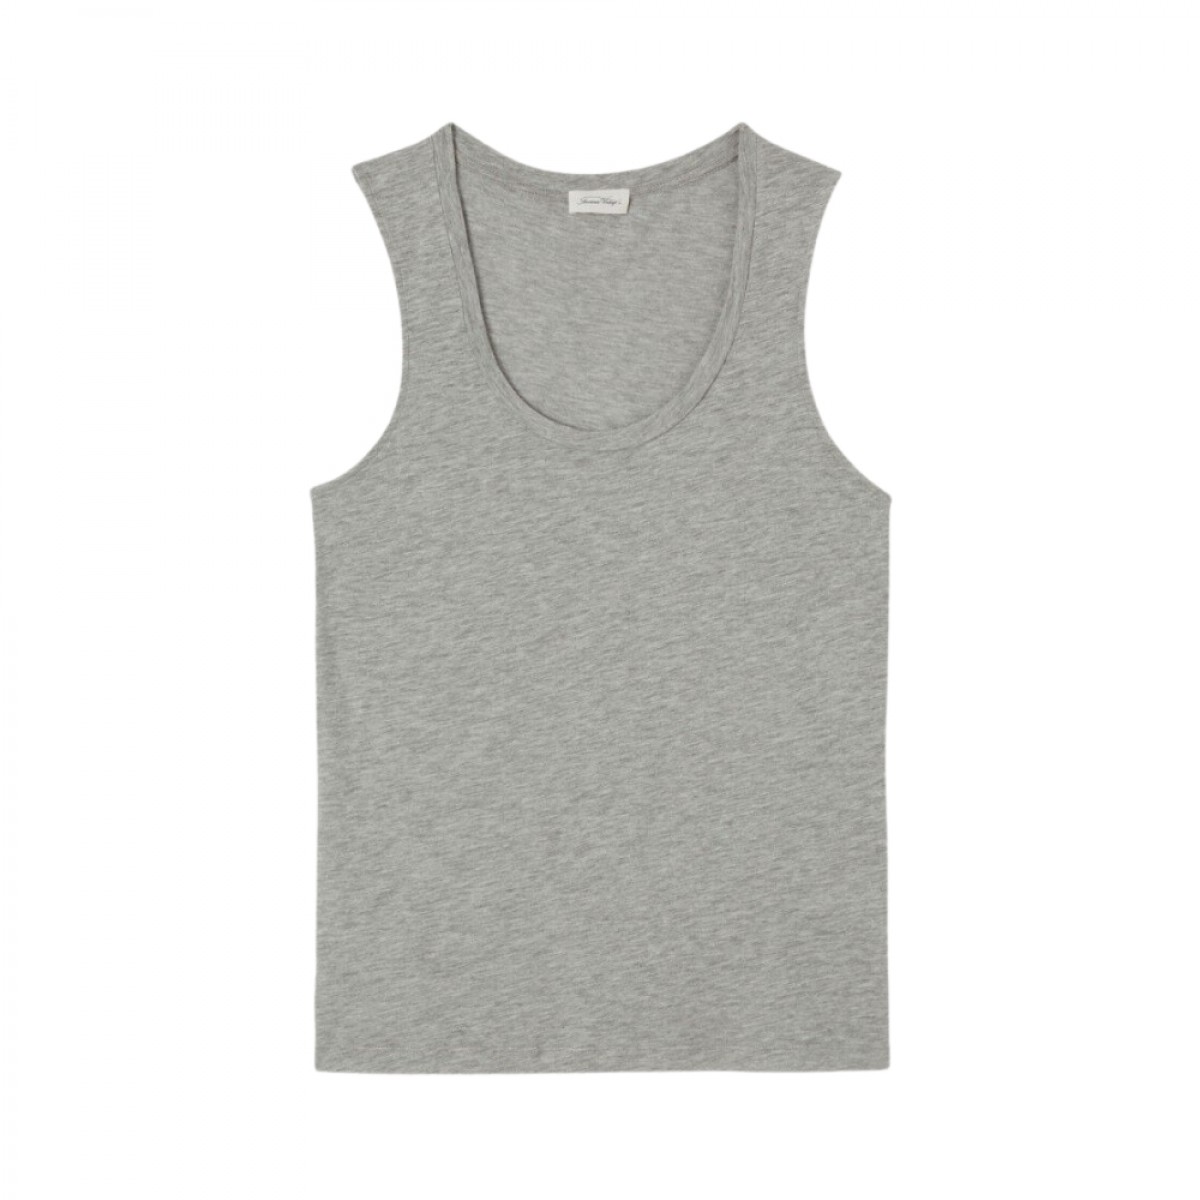 jacksonville strop t-shirt - heather grey - front